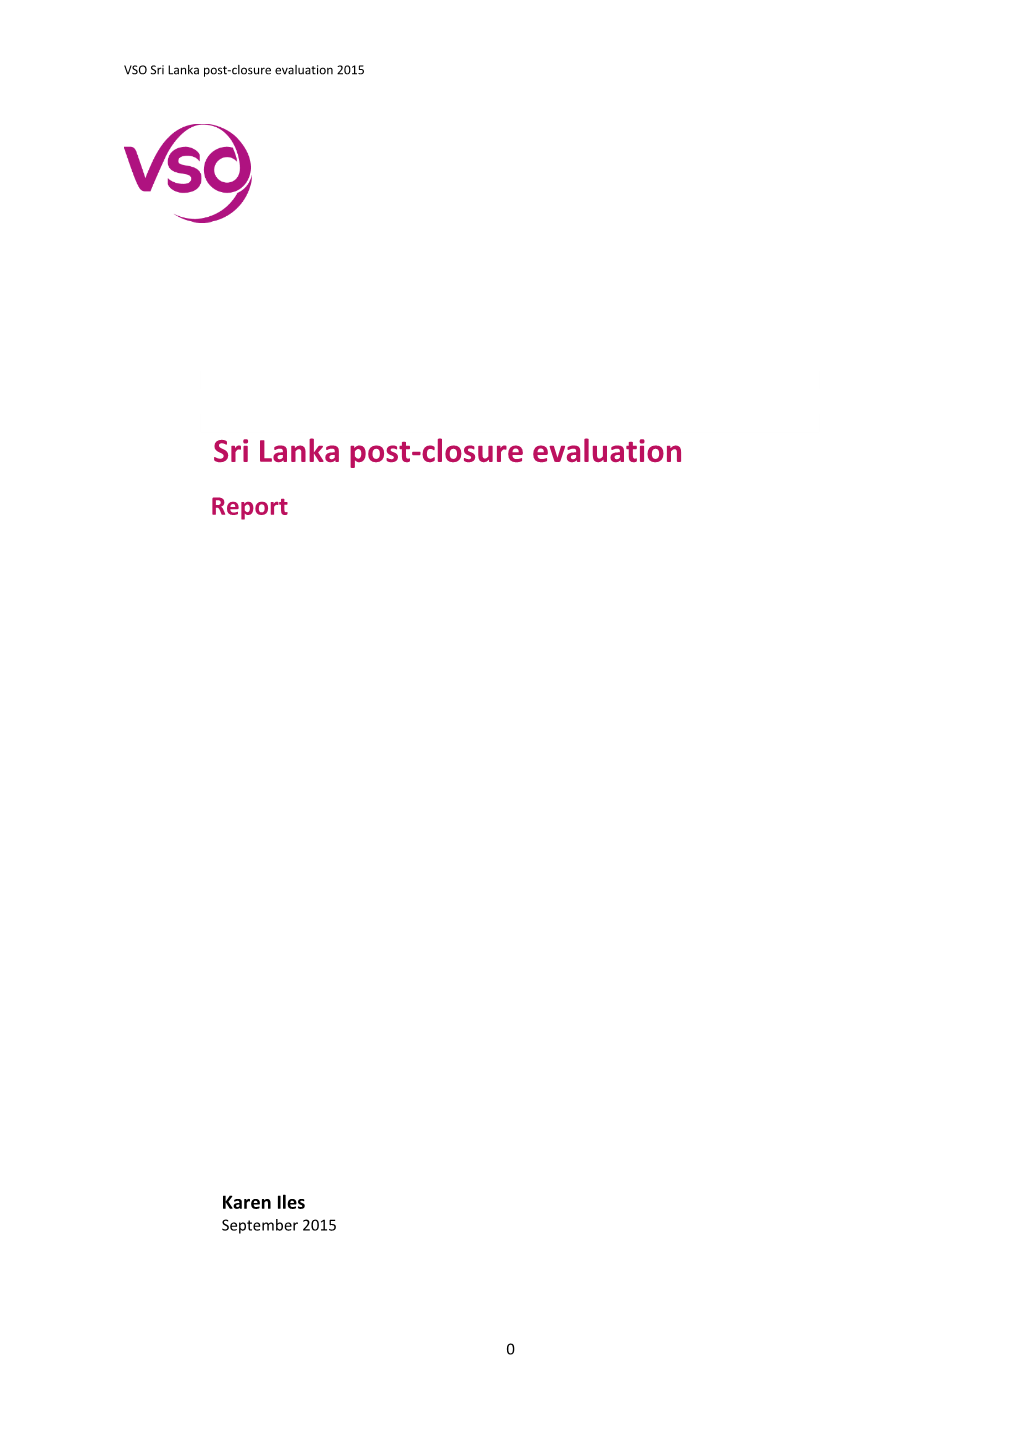 Sri Lanka Post-Closure Evaluation 2015